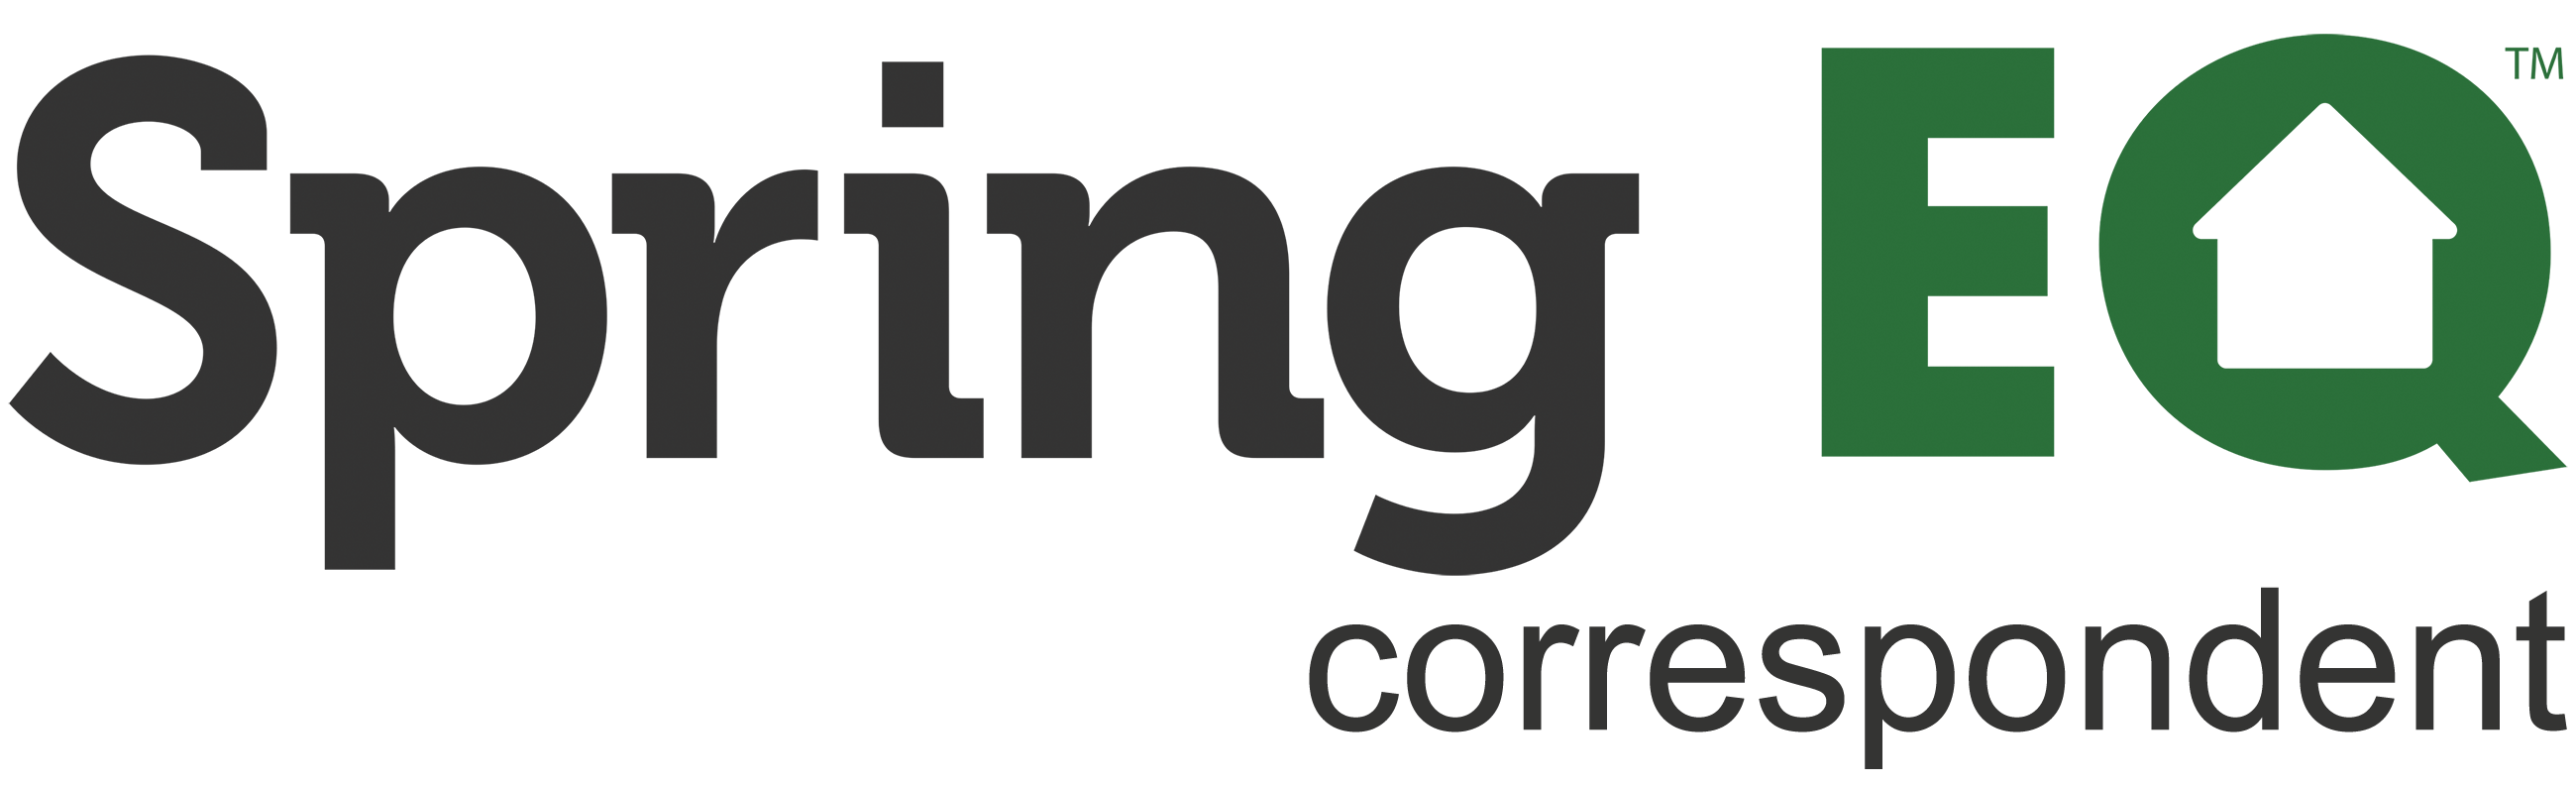 SpringEQ_corr_logo_fin